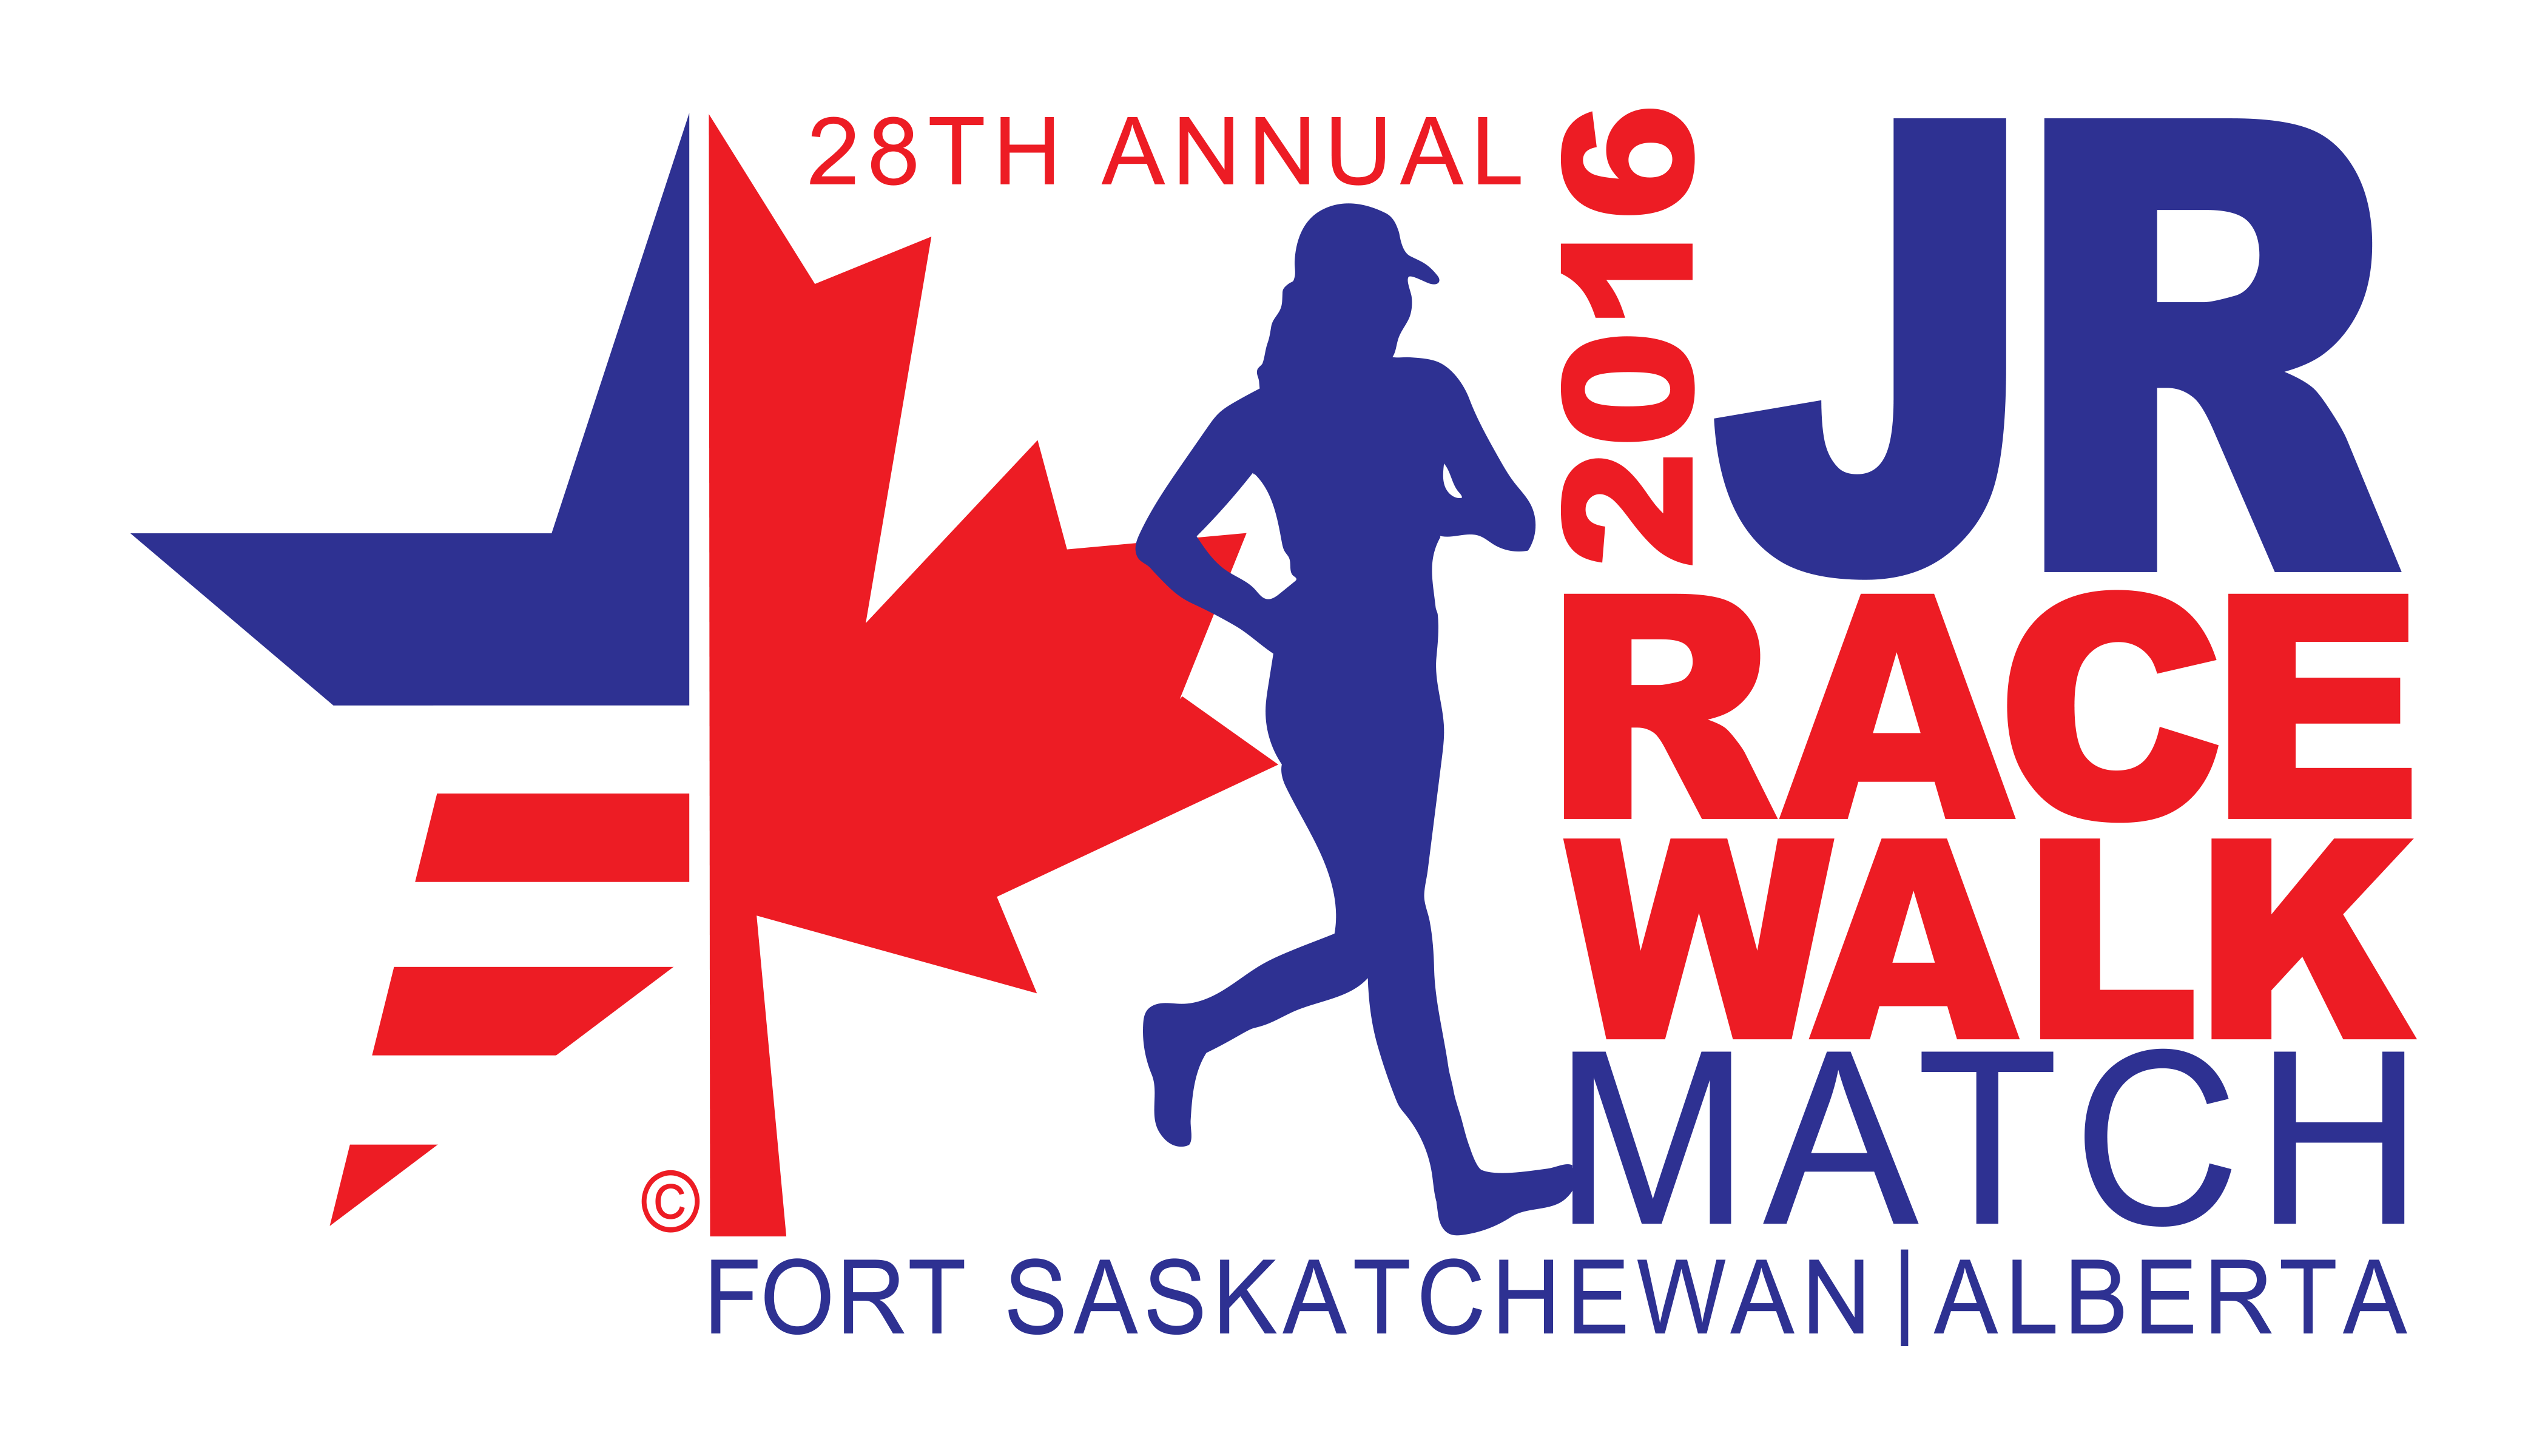 Canada USA Jr. Racewalk Match